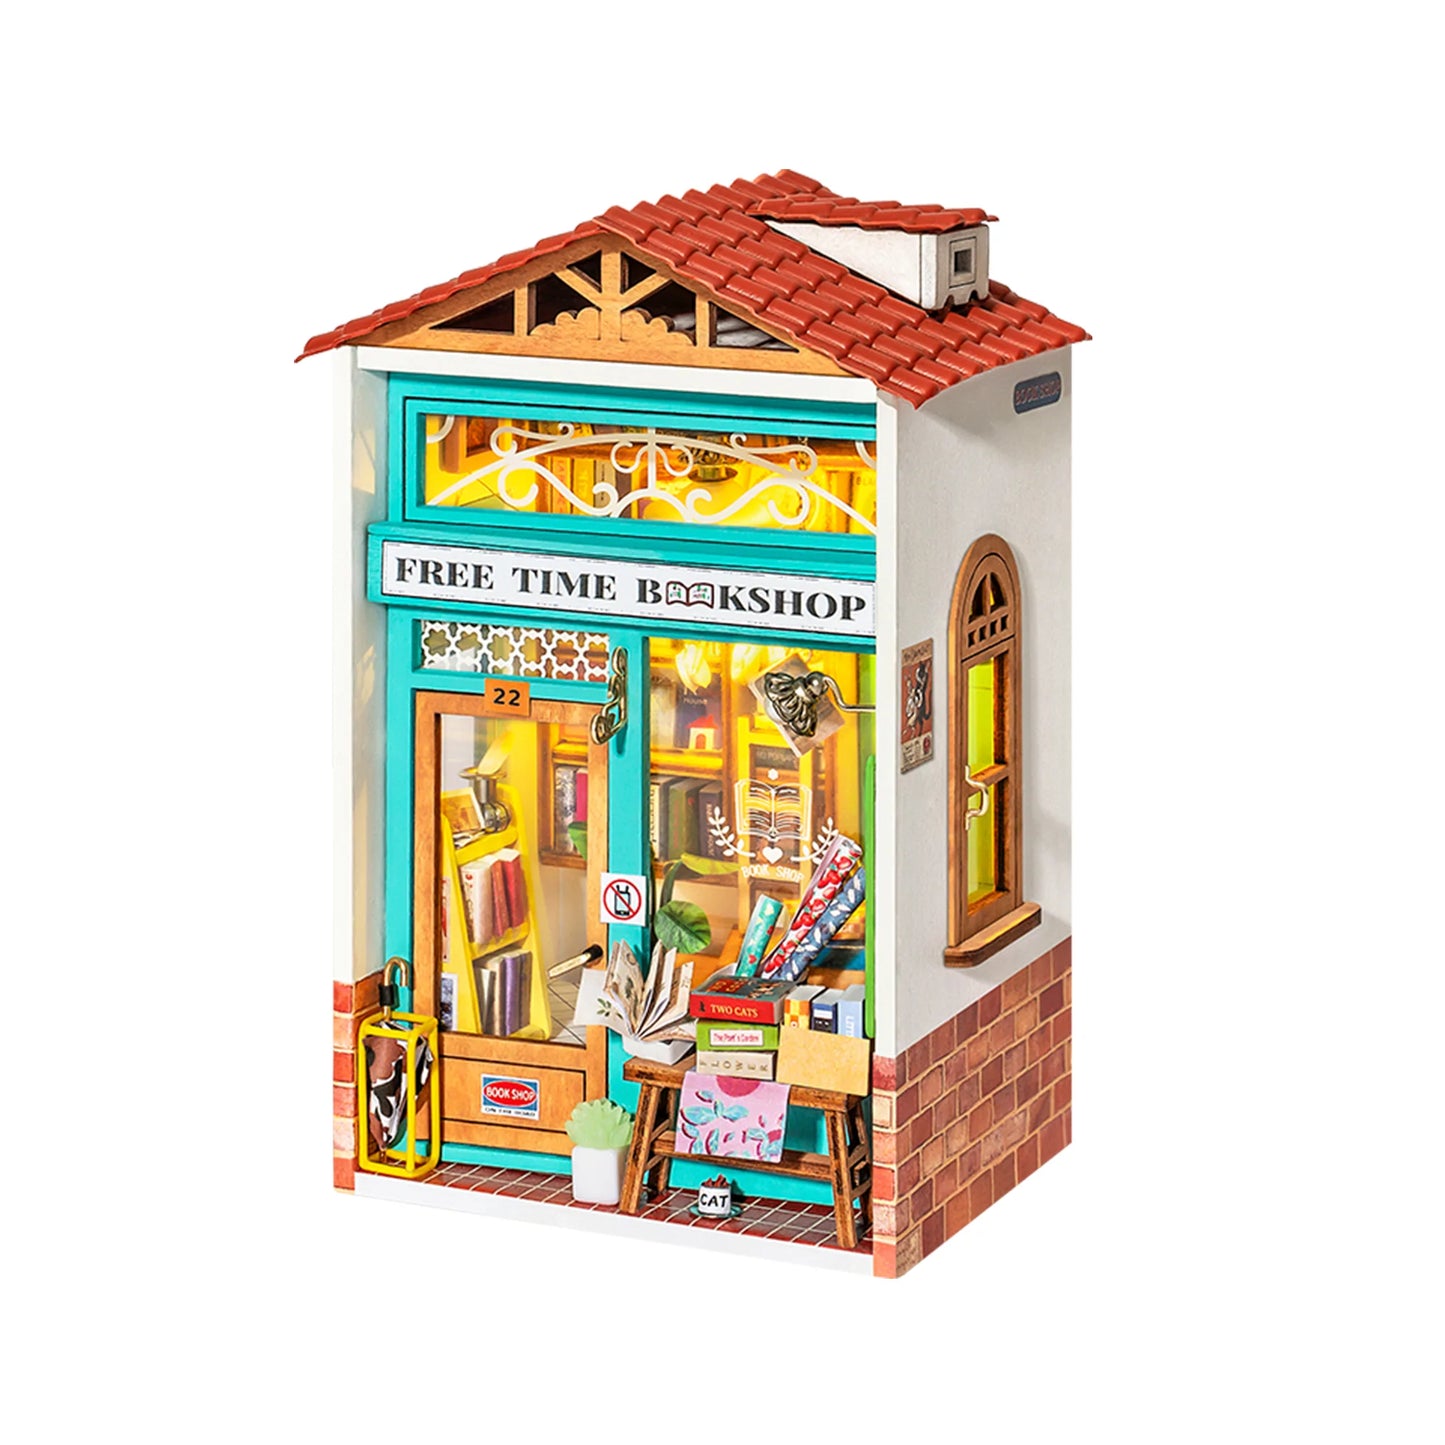 Hands Craft DIY Miniature House Kit Free Time Bookshop